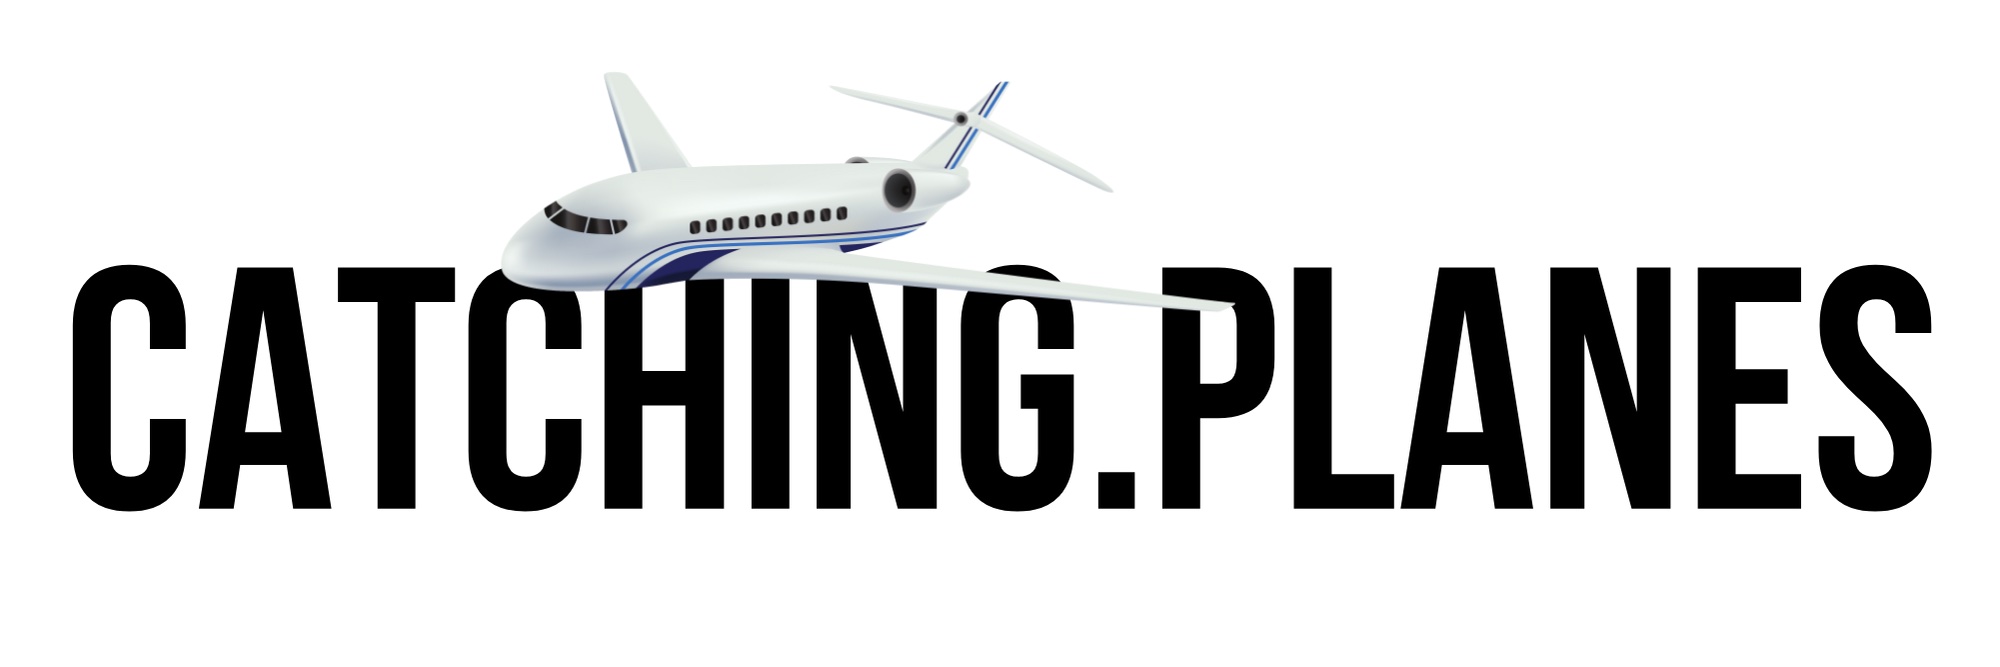 Catching planes logo